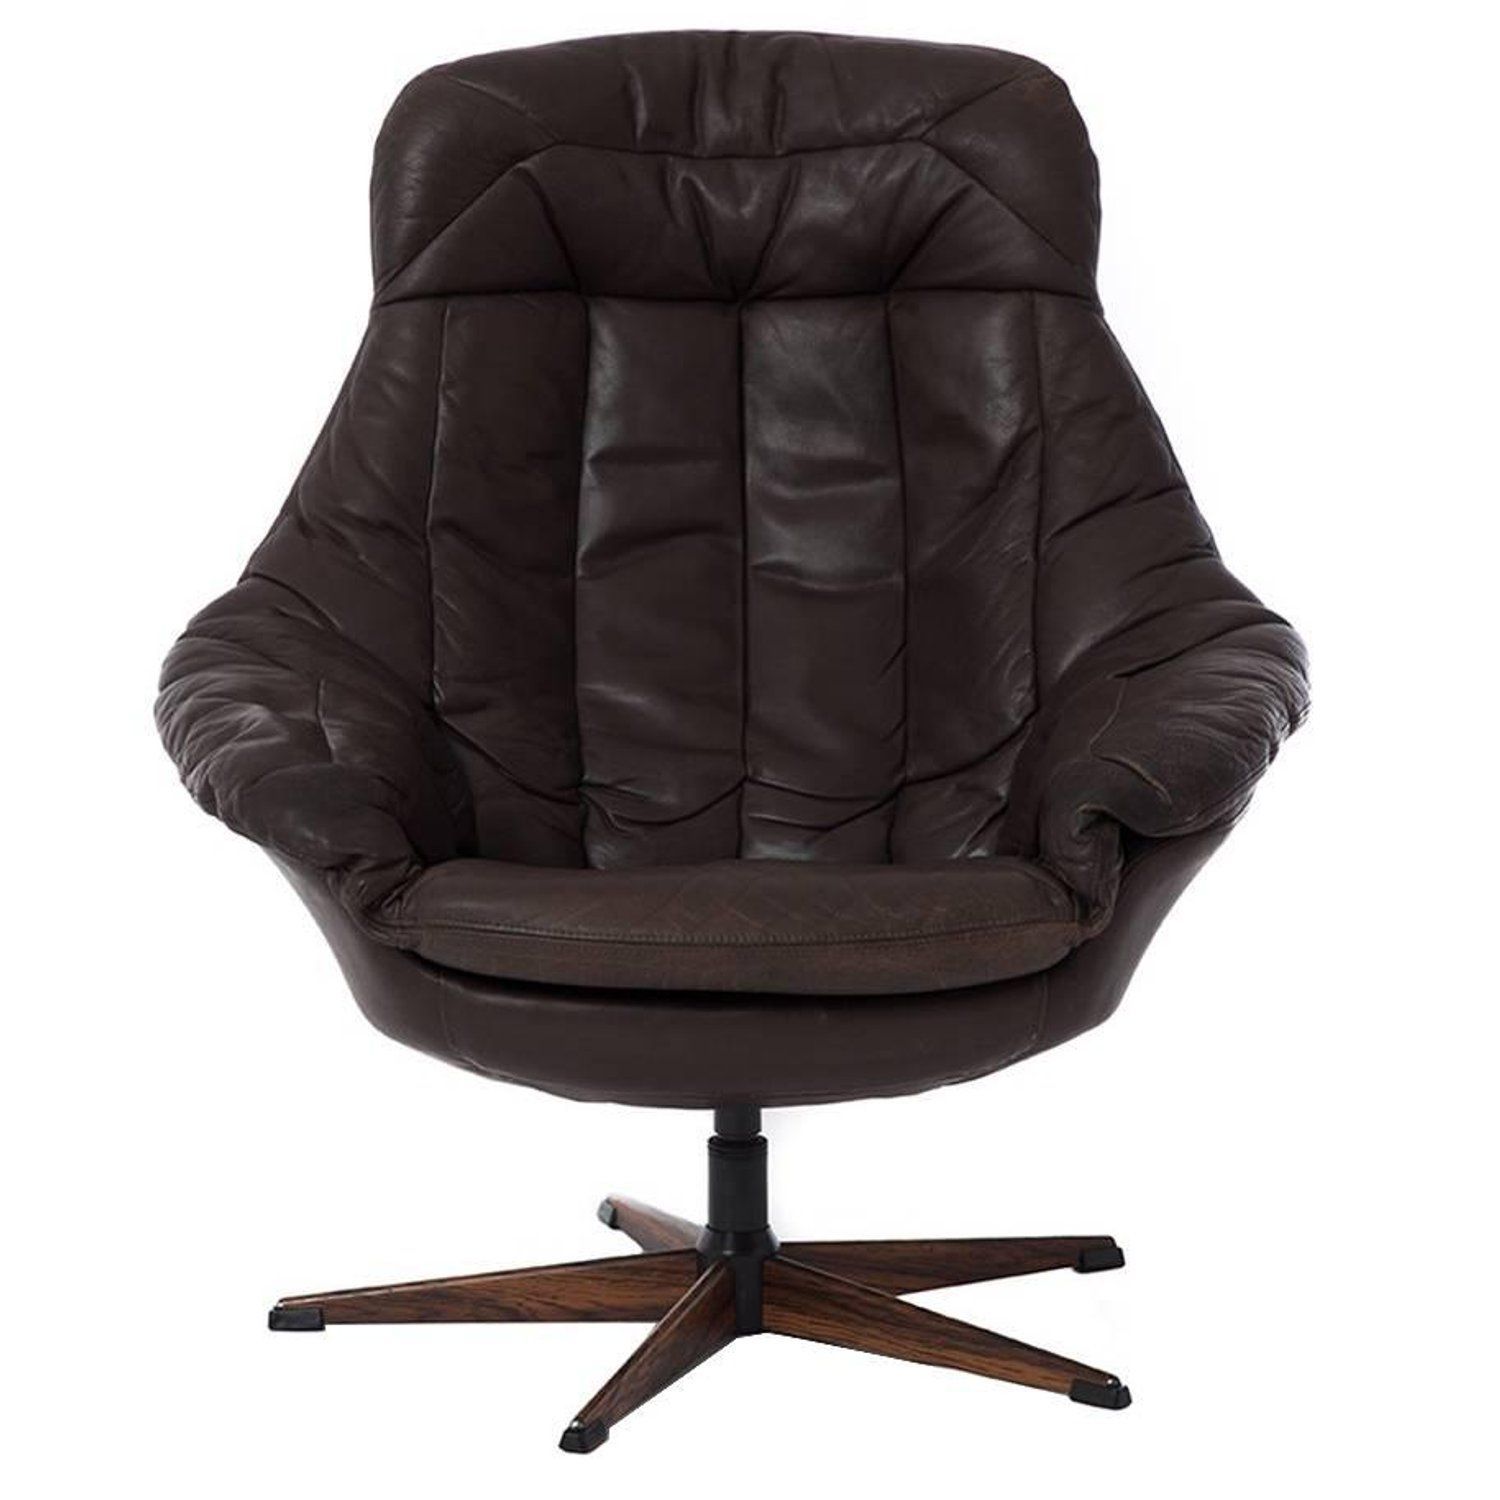 Danish Modern Swivel Glove Chair In Espresso Leatherh. W. Klein Throughout Espresso Leather Swivel Chairs (Photo 6 of 20)